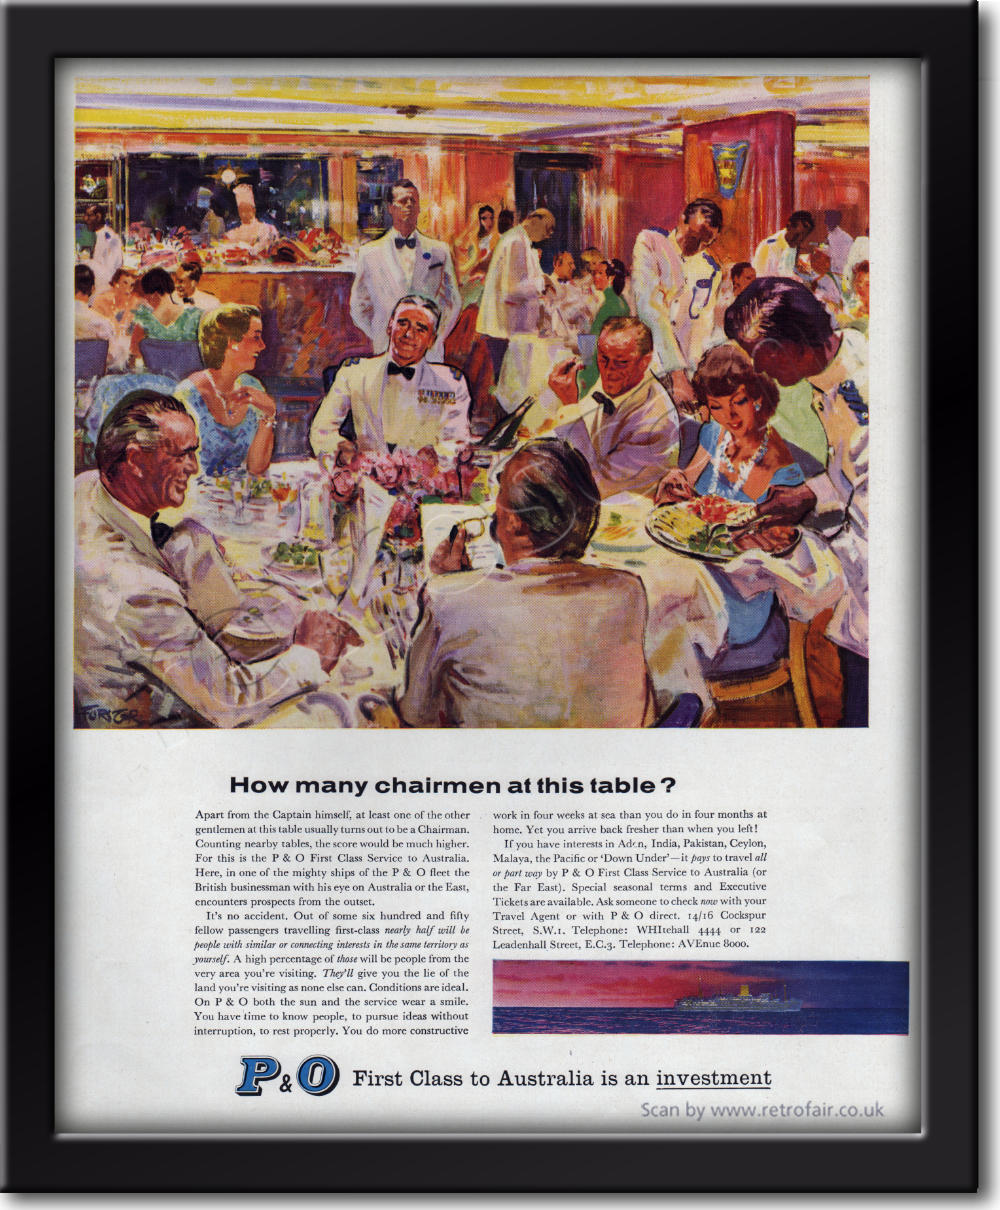 1959 P & O Cruise Line advert